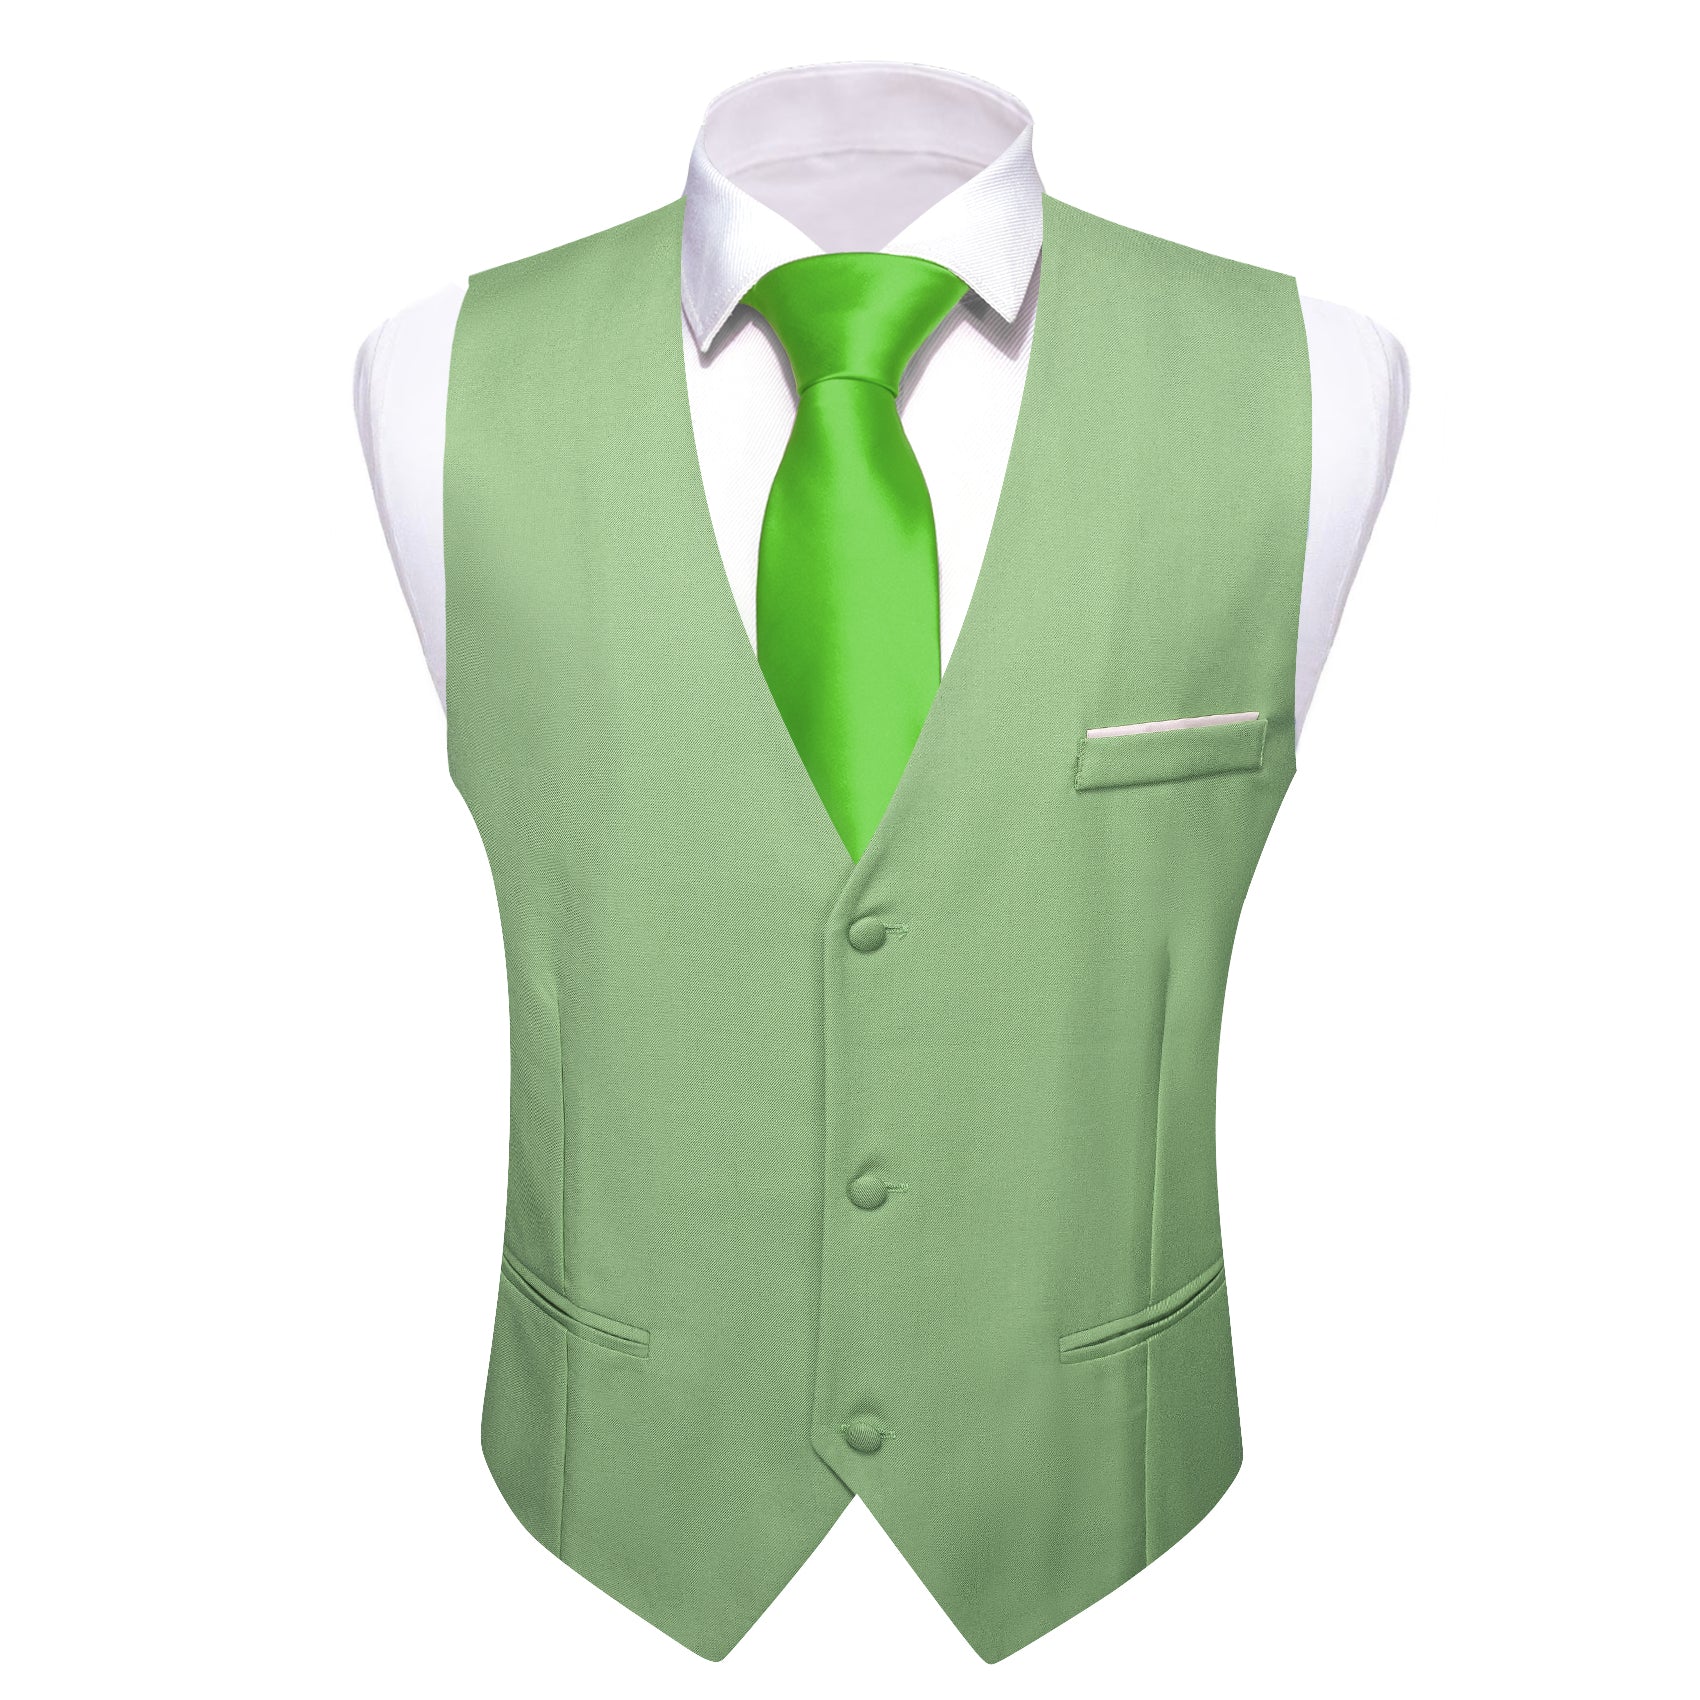 Barry.Wang Men's Work Vest Turquoise Green Solid Business Vest Suit